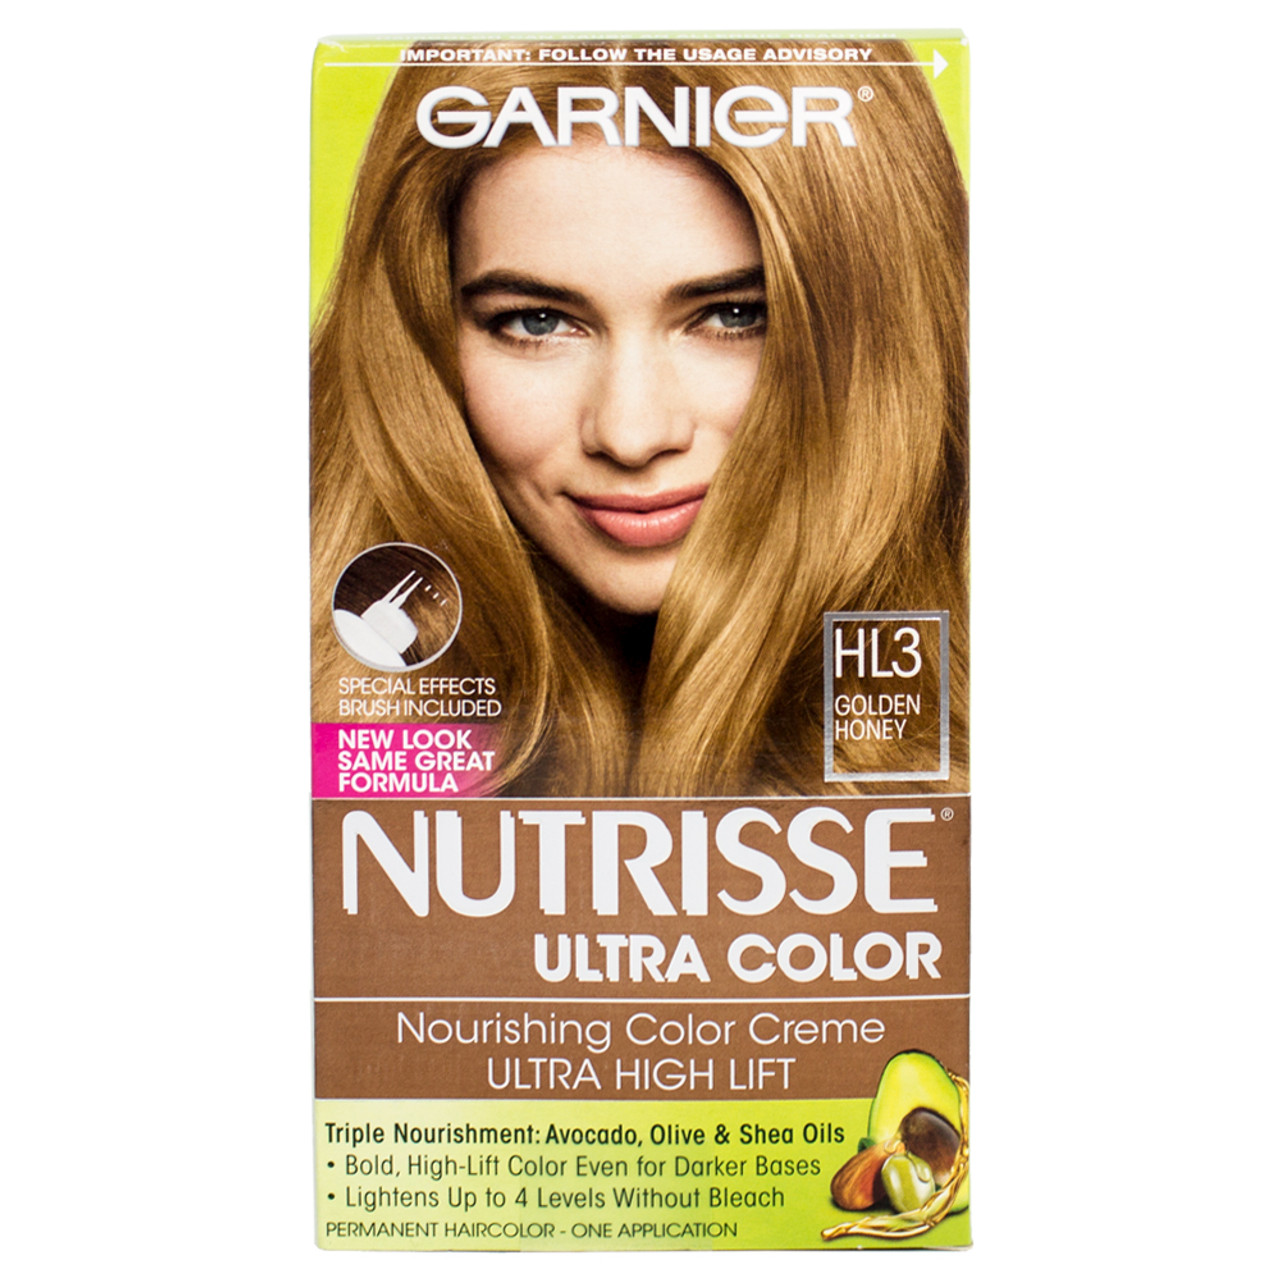 Garnier Nutrisse Ultra Nourishing Creme Hair Color